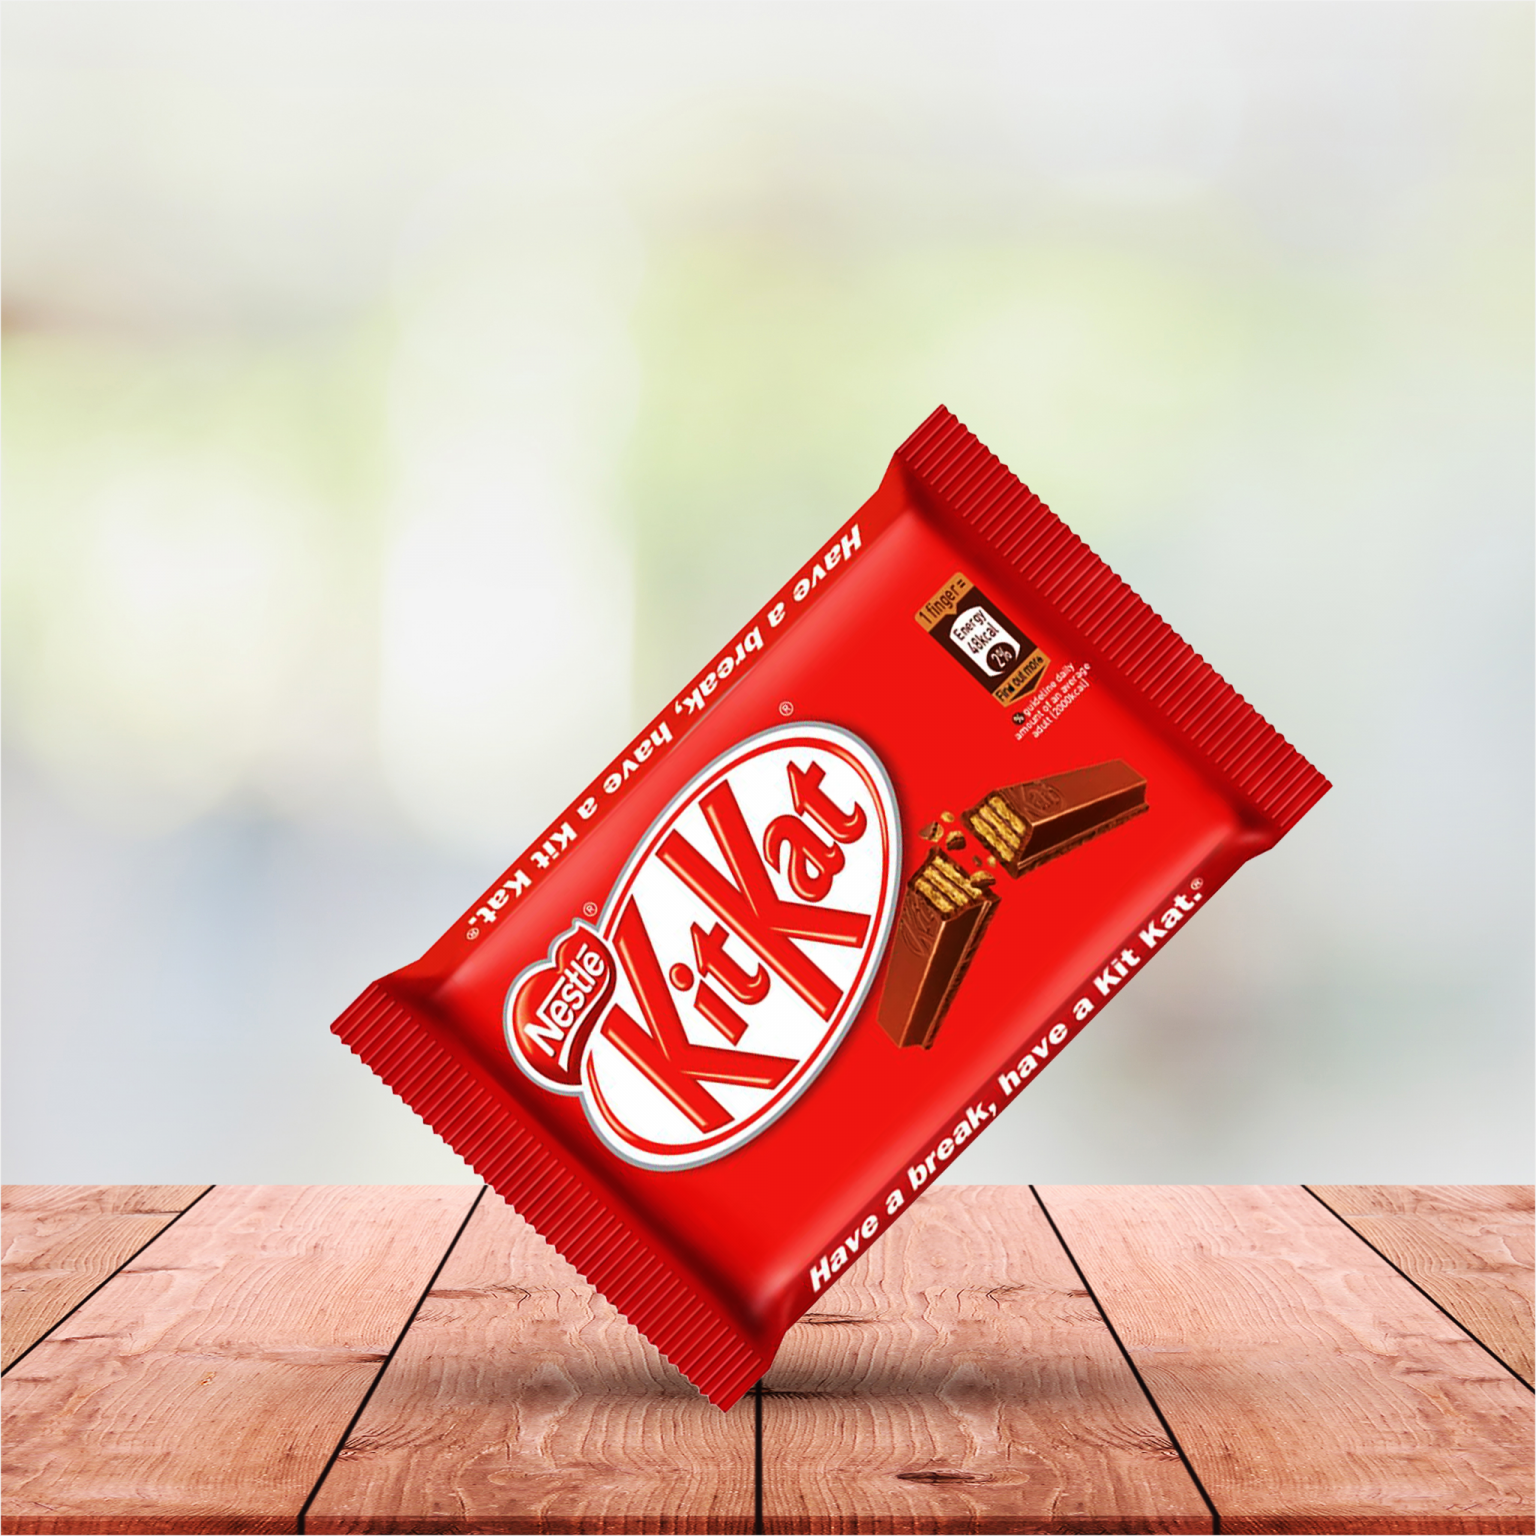 Kitkat -كيت كات -ماجيك ستور -magic stores